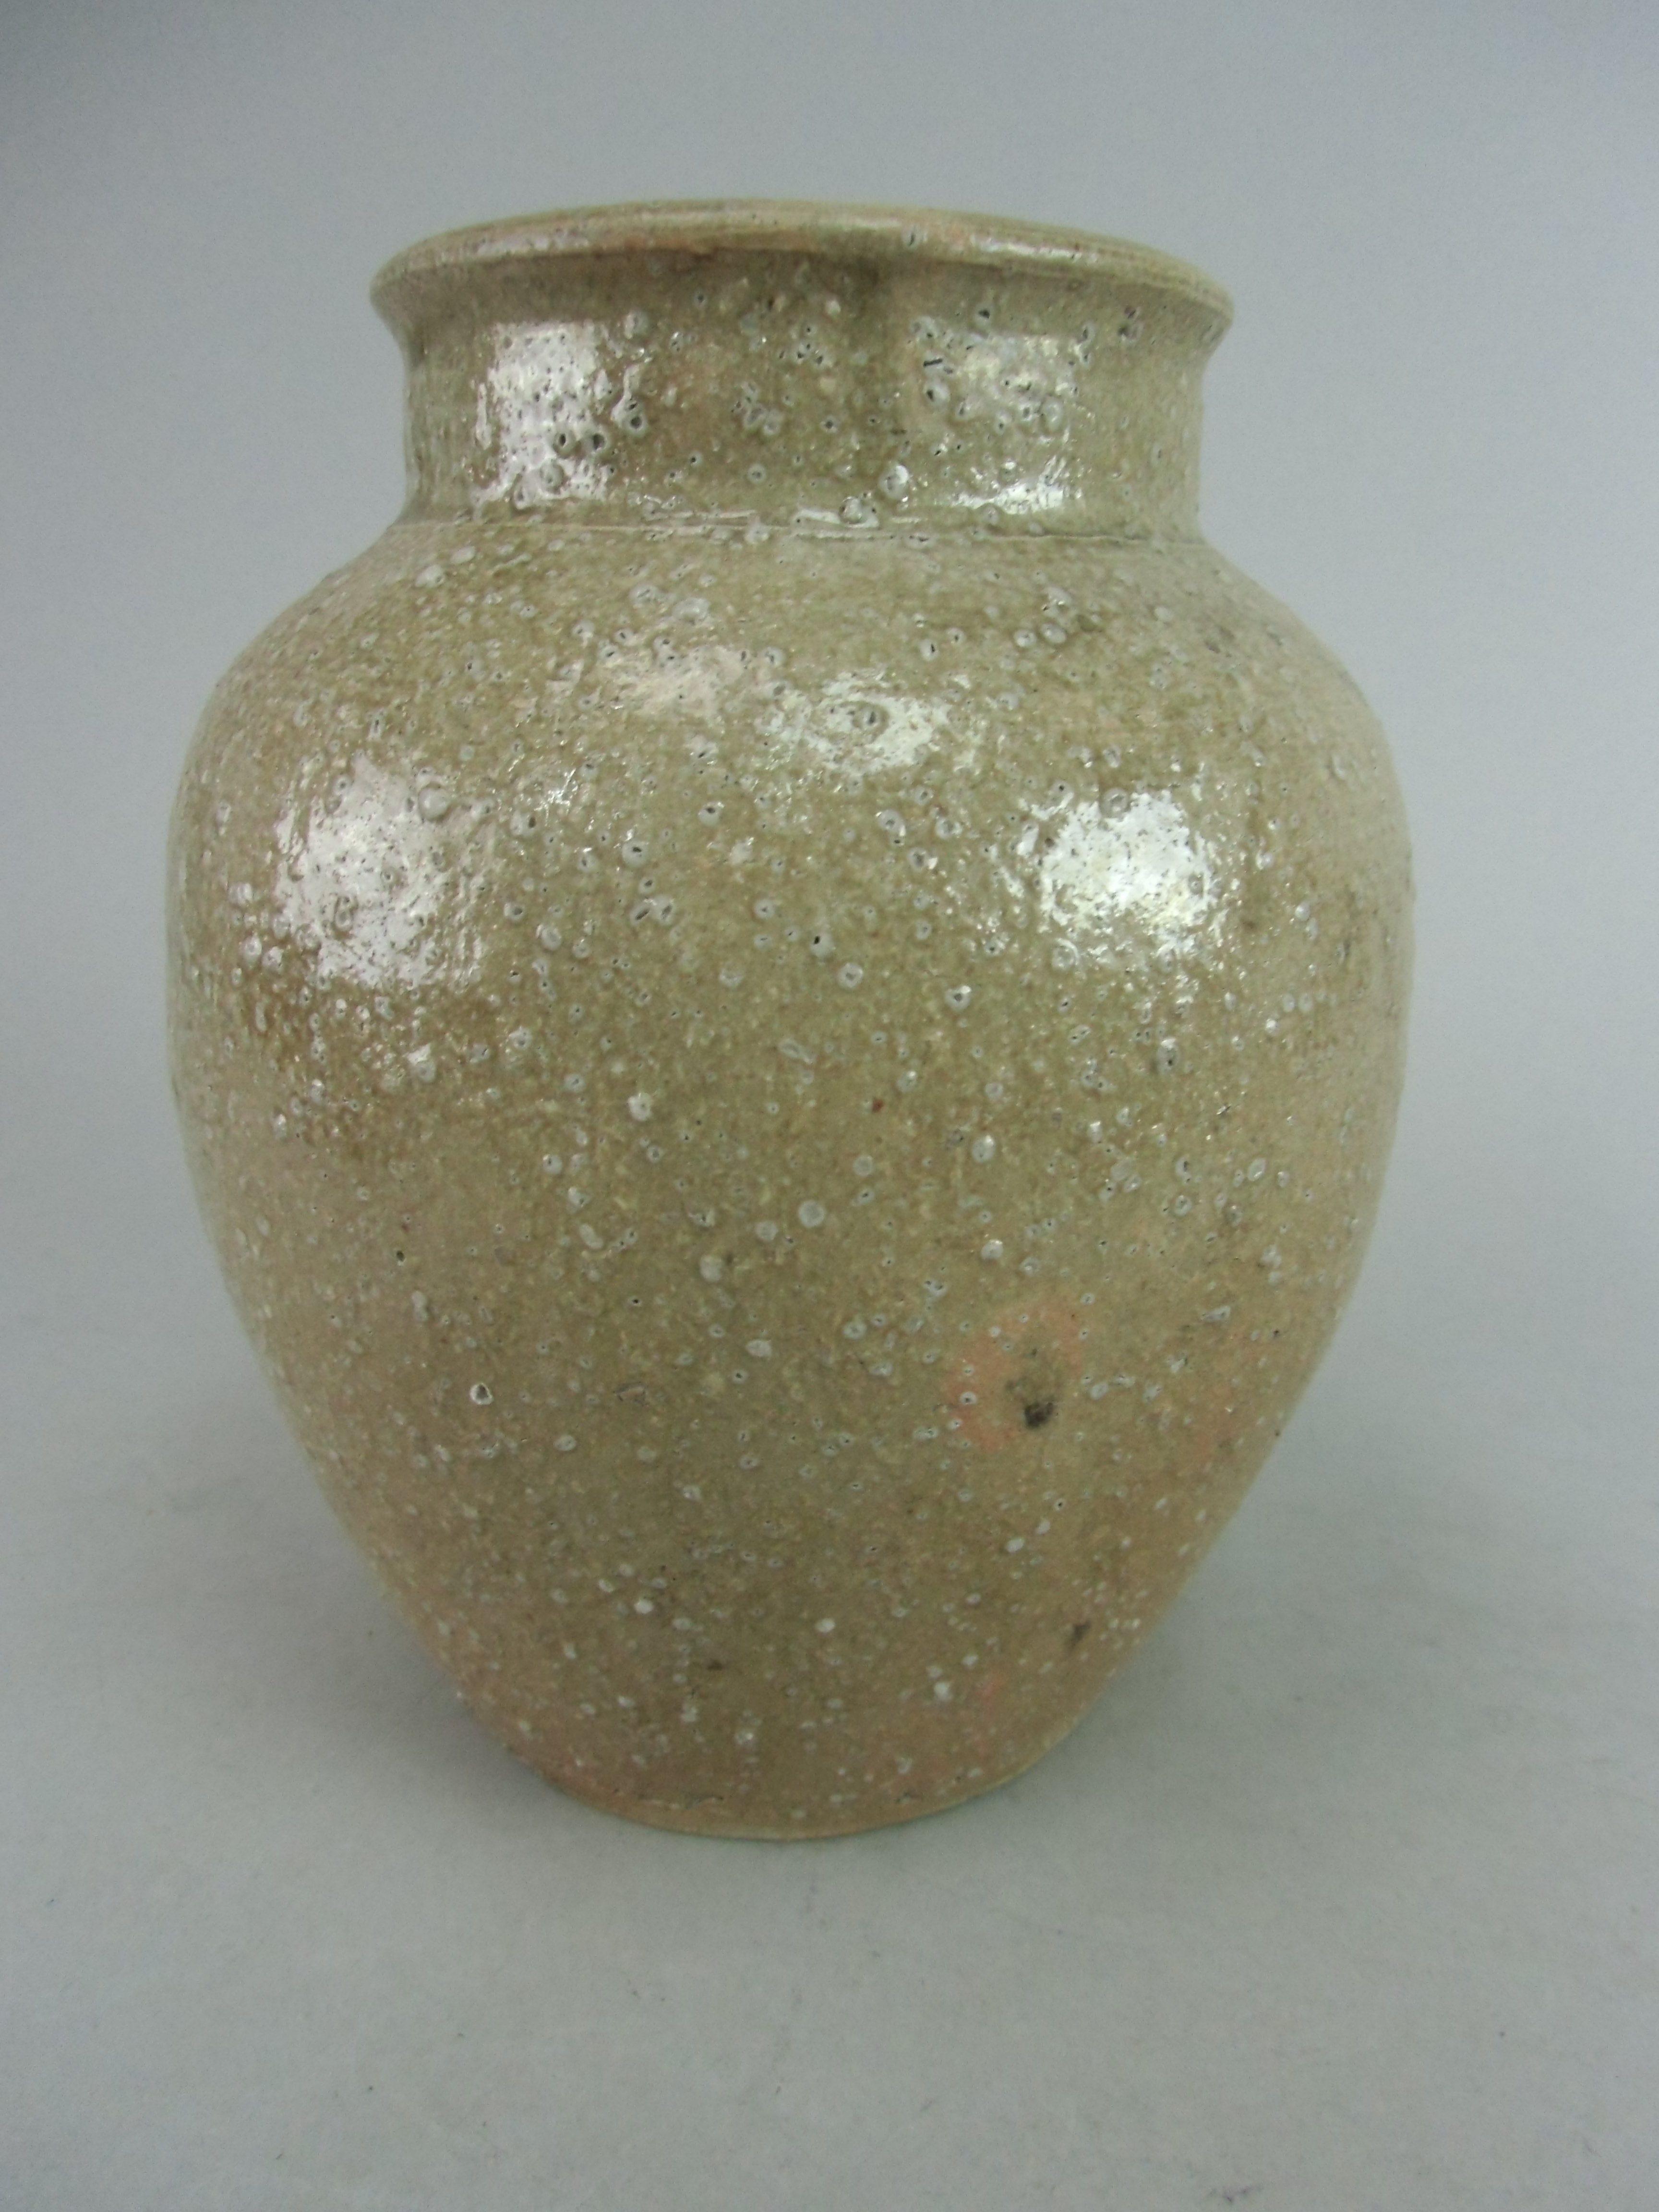 Japanese Ceramic Flower Vase Kabin Ikebana Arrangement Beige Pottery FV567